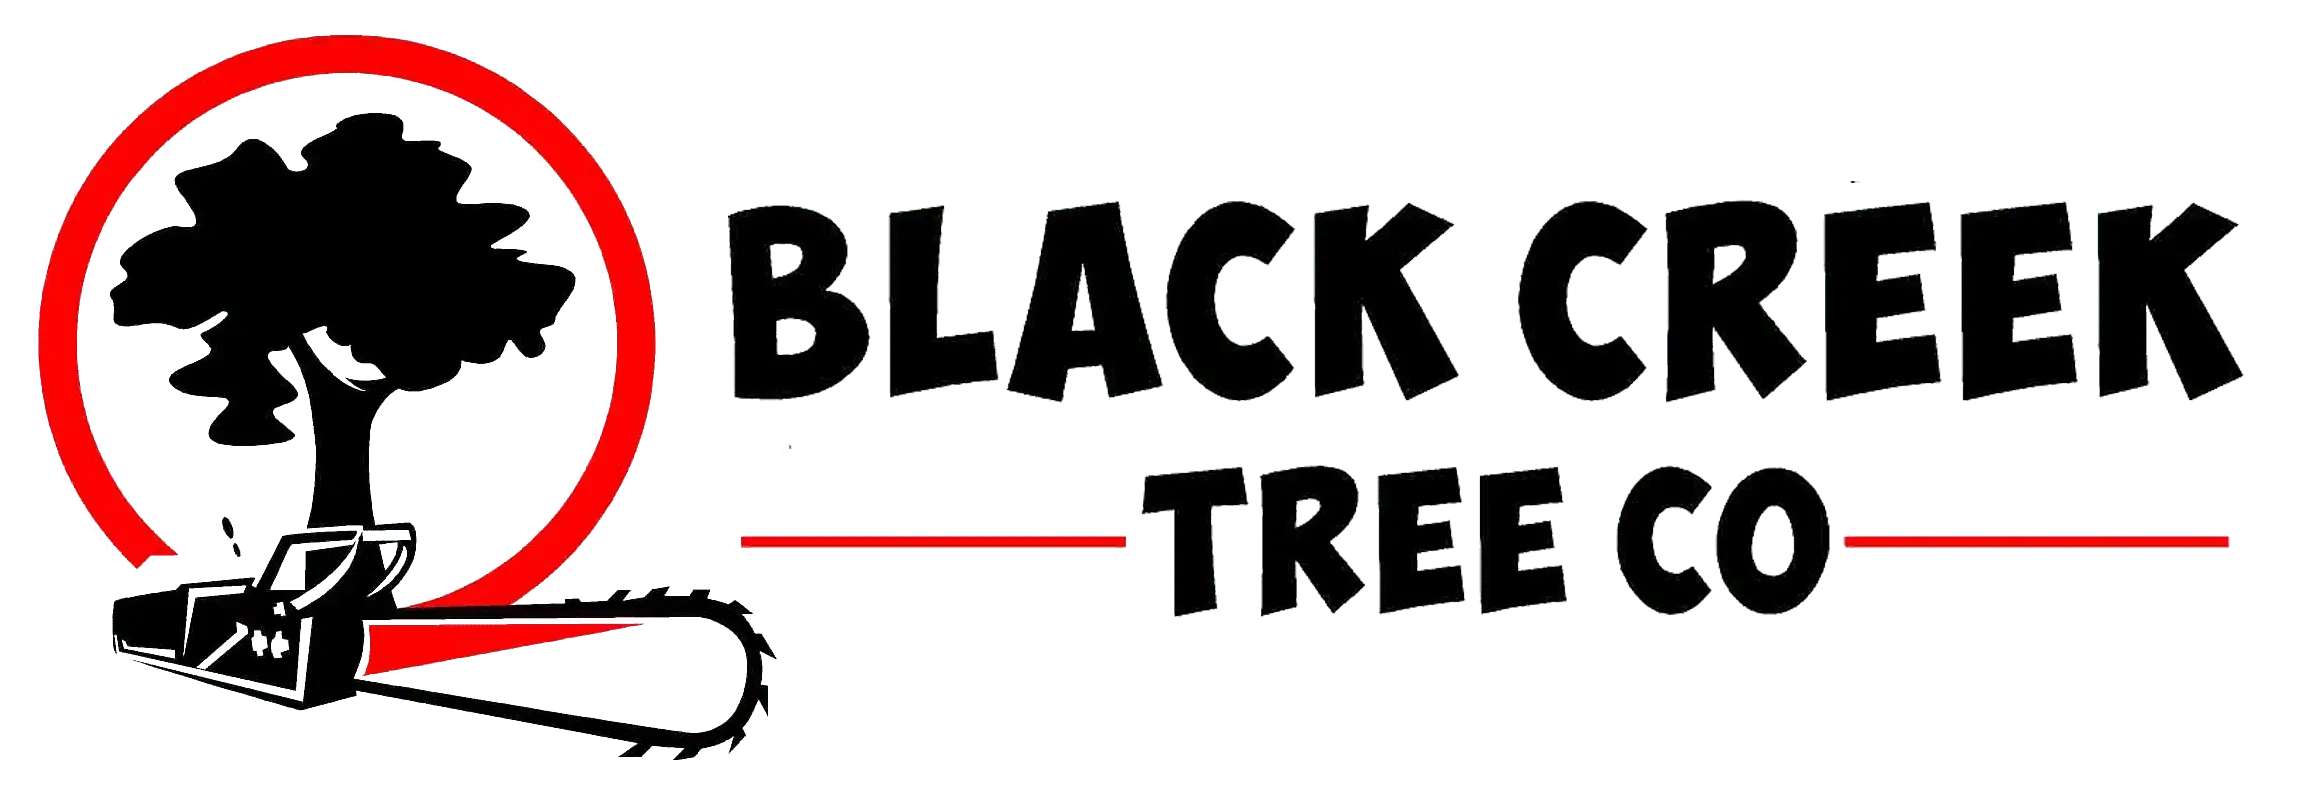 Black Creek Tree Co. Logo